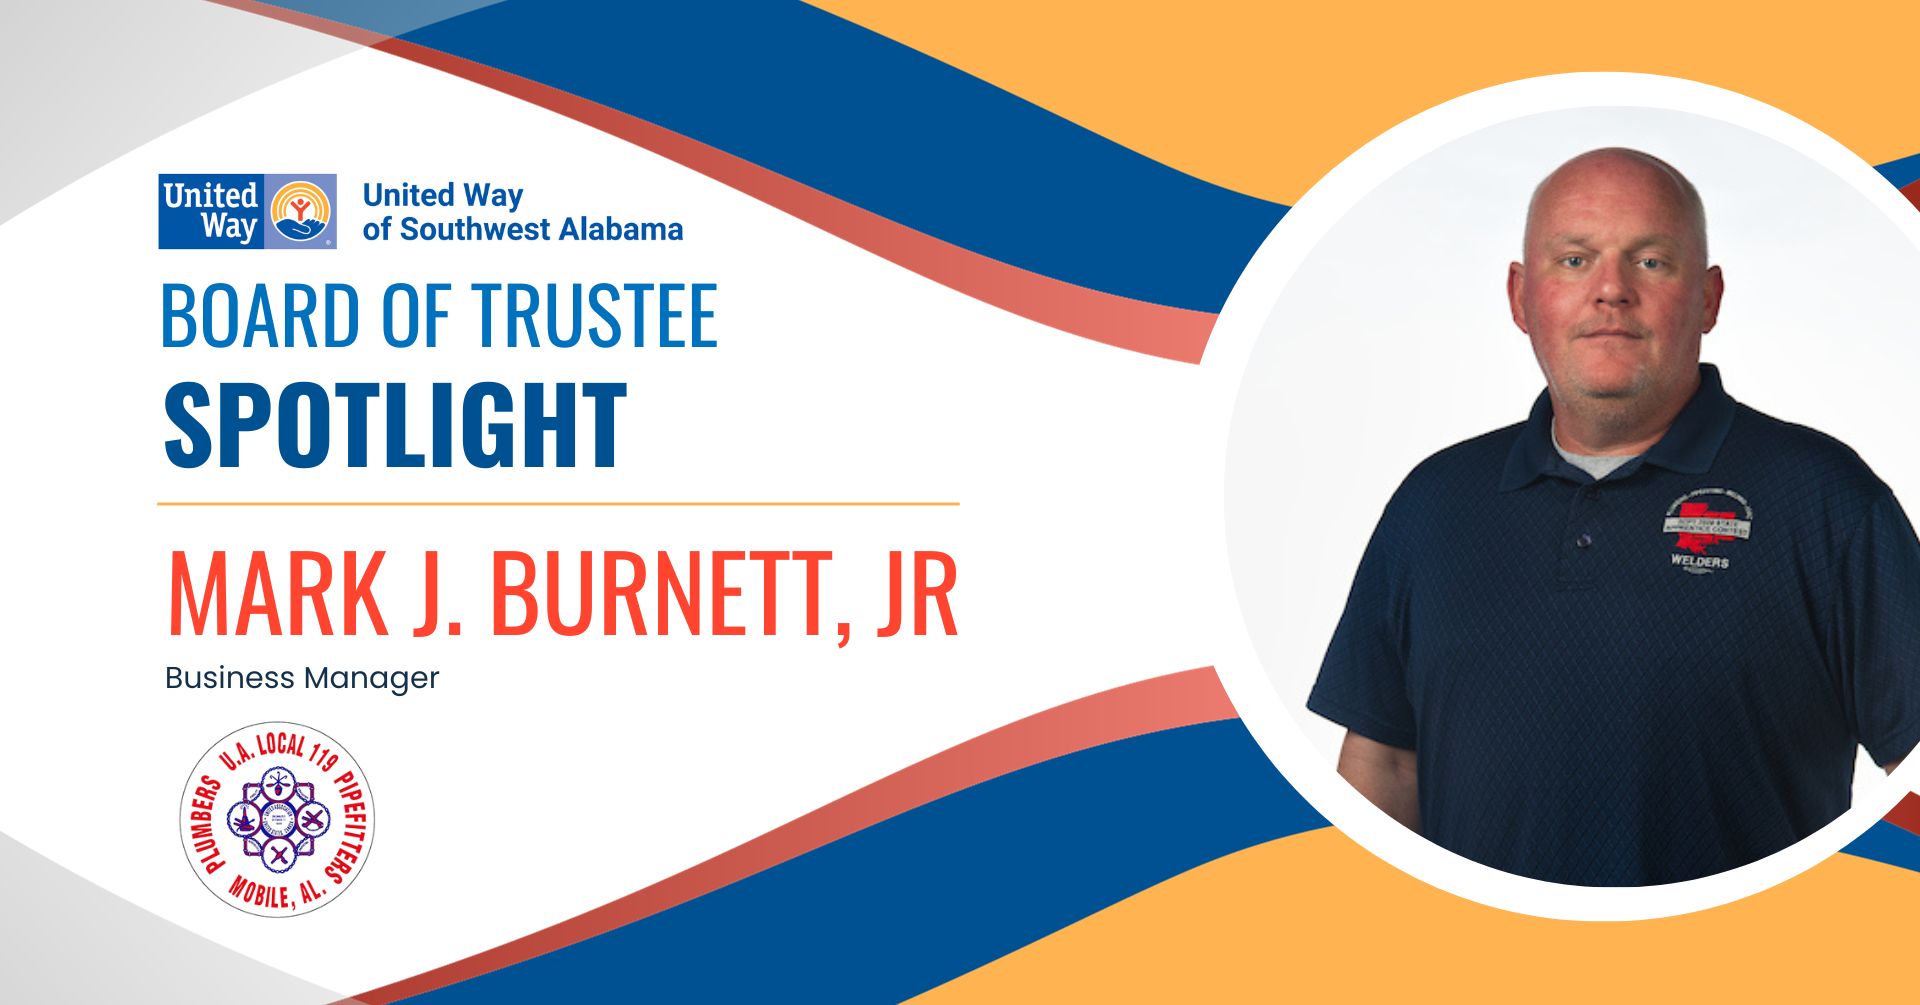 UWSWA Board Member Spotlight on Mark J. Burnett, Jr., Business Manager for UA Plumbers and Pipefitters Local 119